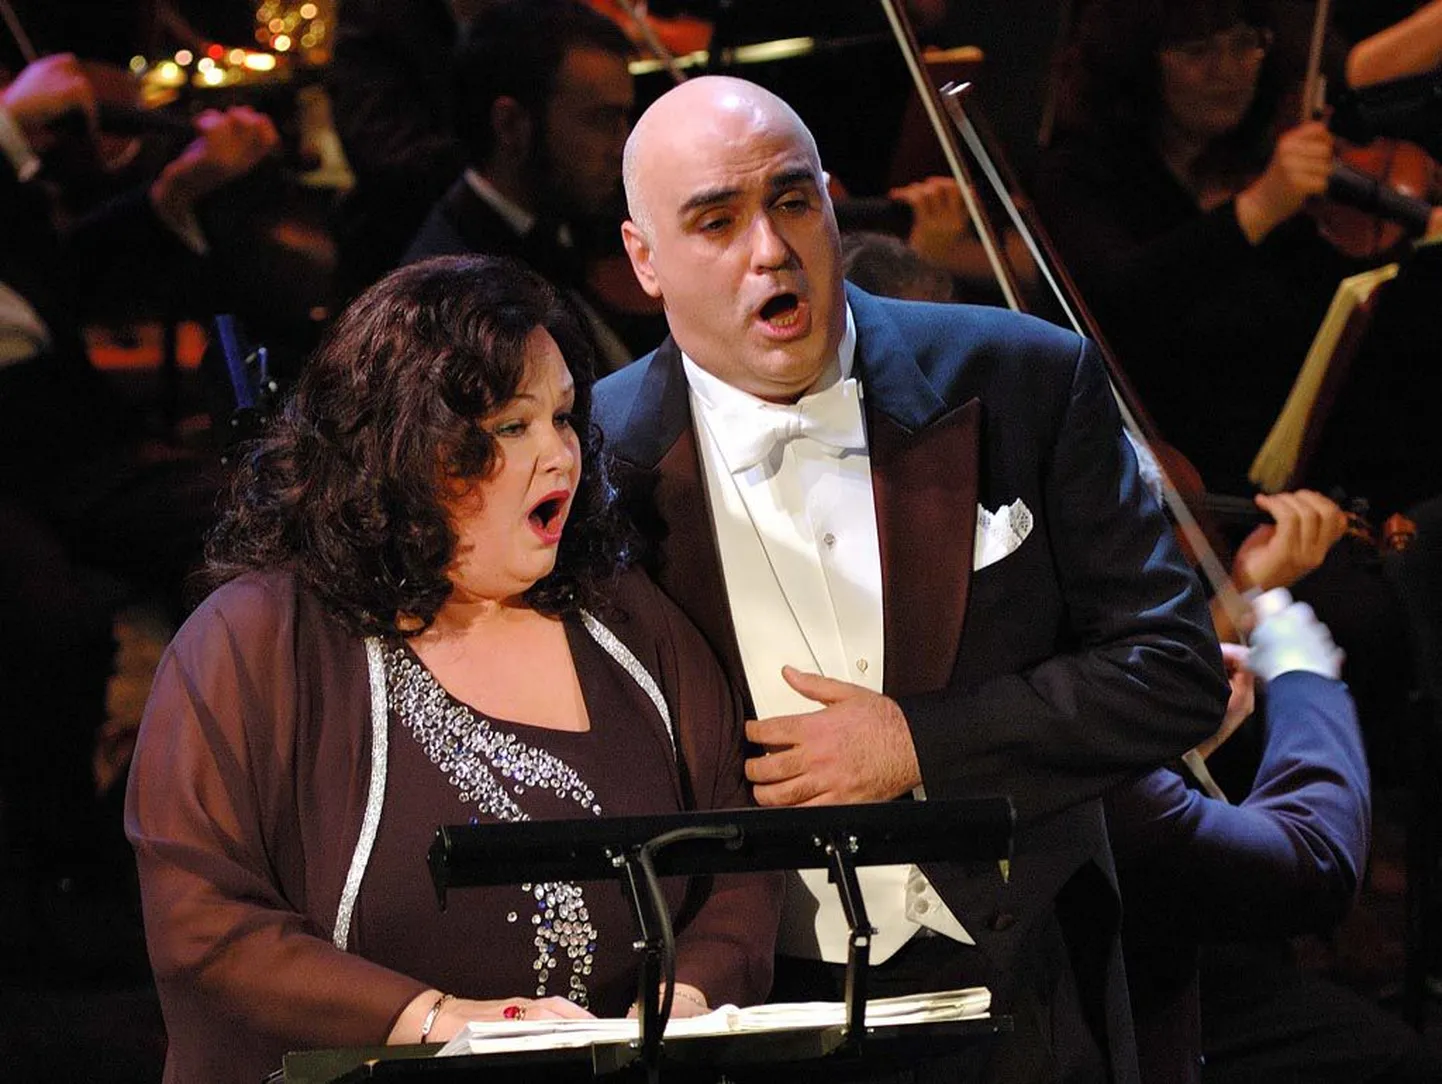 Nadia Kurem Mathildena ja Mario Zeffiri Arnold Melchali rollis ooperis "Wilhelm Tell".